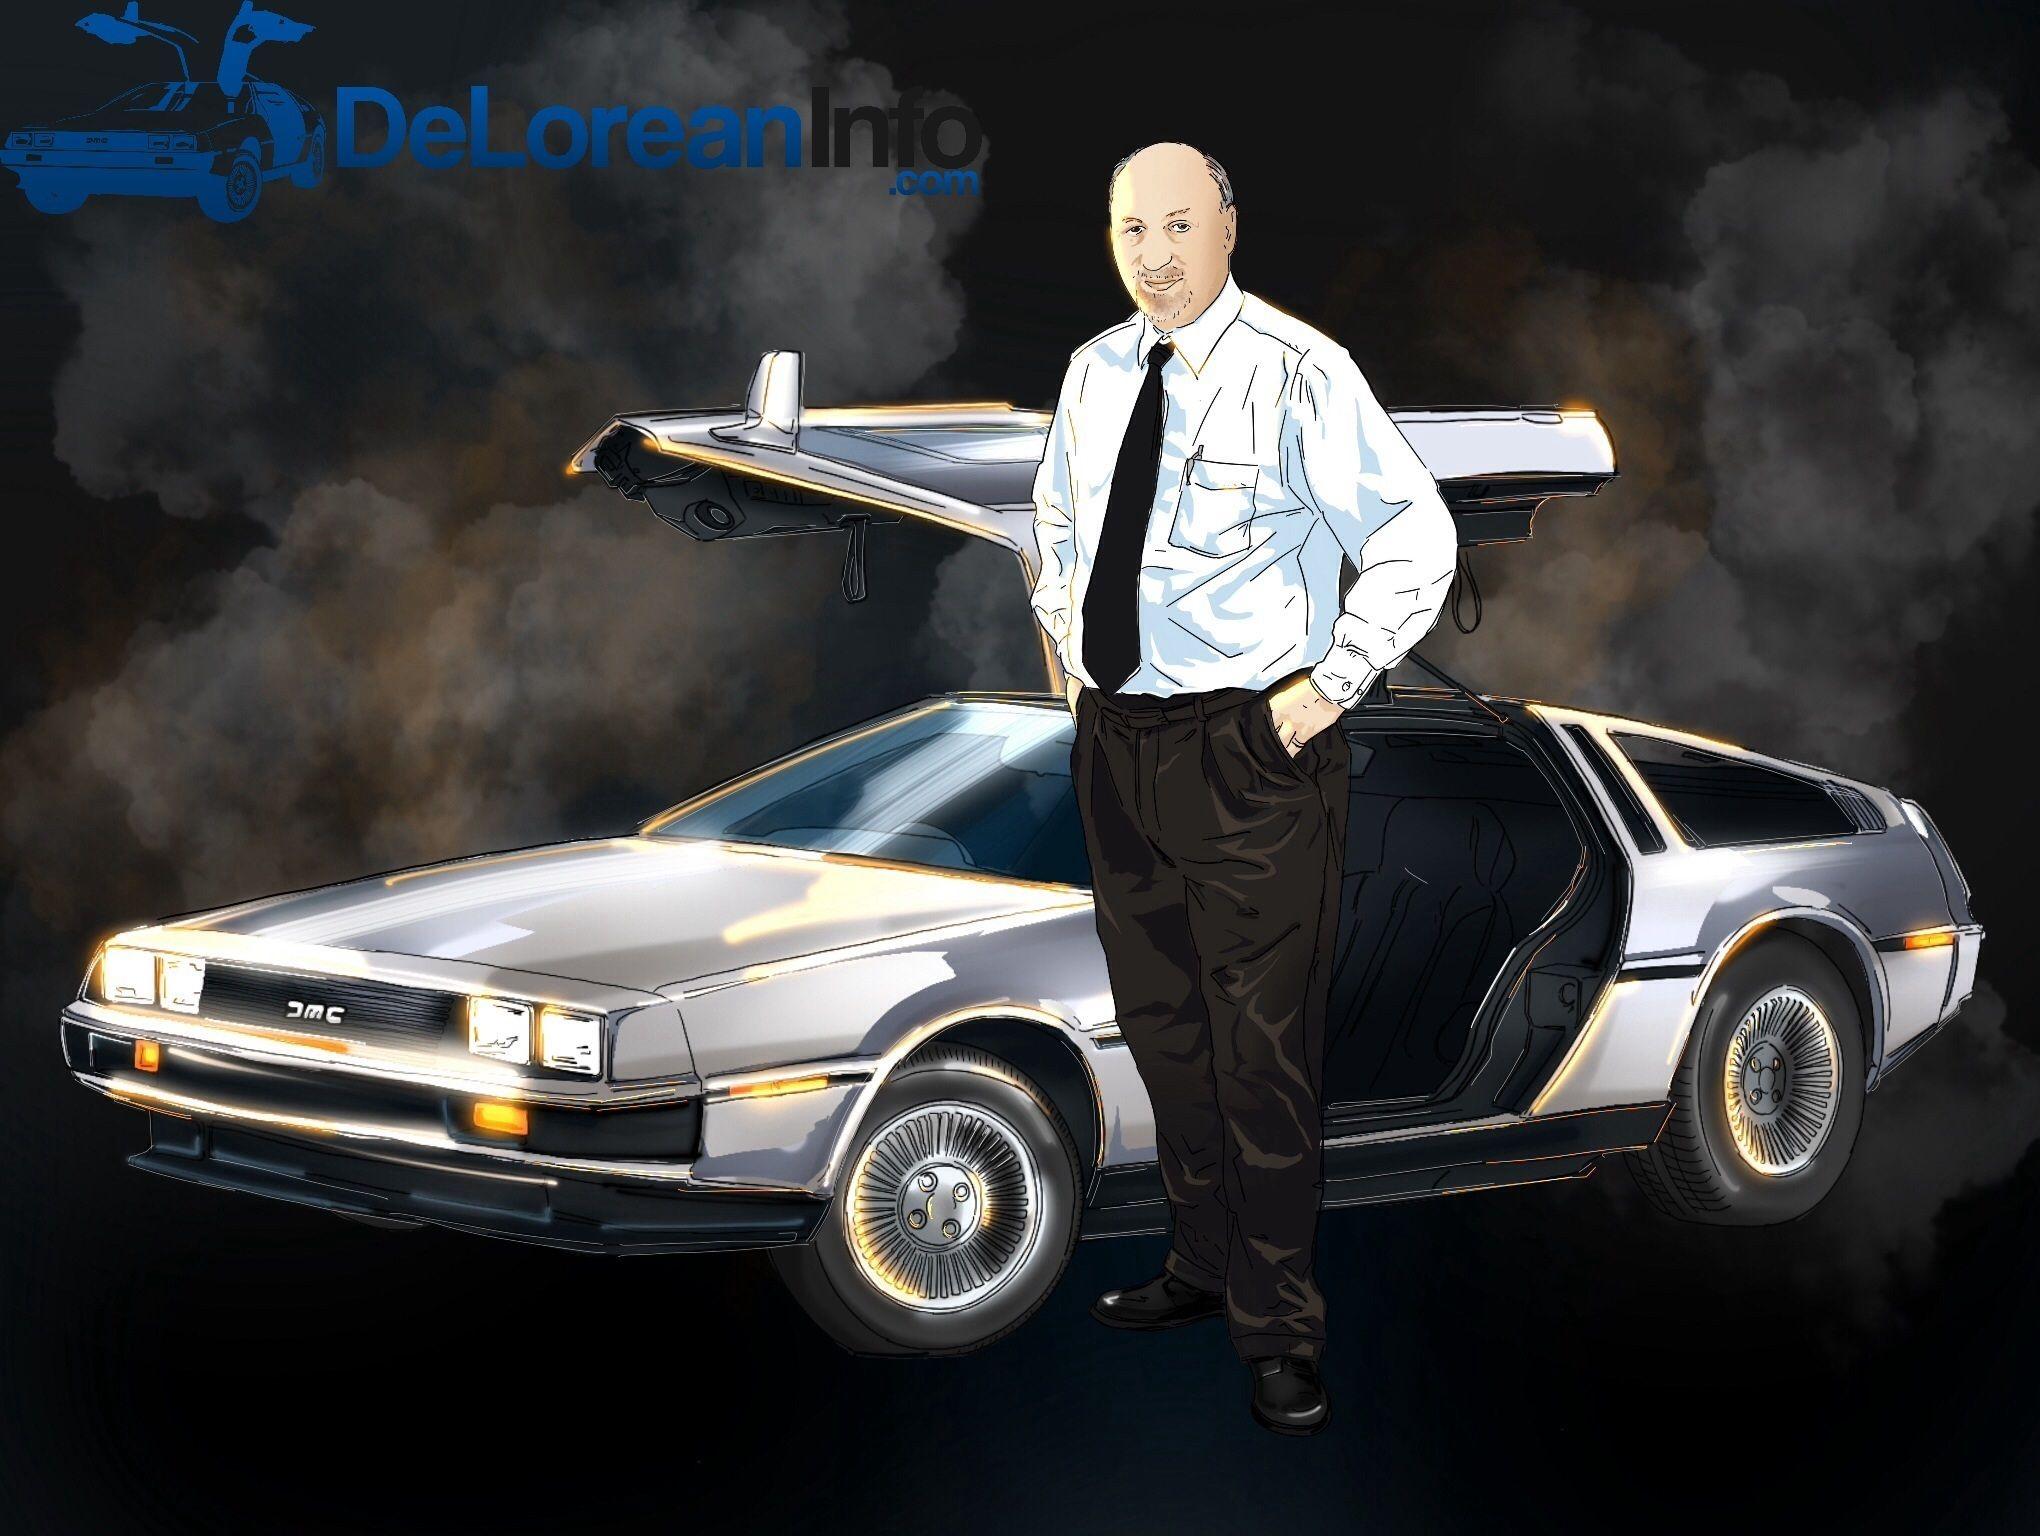 DeLorean DMC-12 Logo - DeLorean Blog Writer Tony De Falco | First Rate DeLorean Information